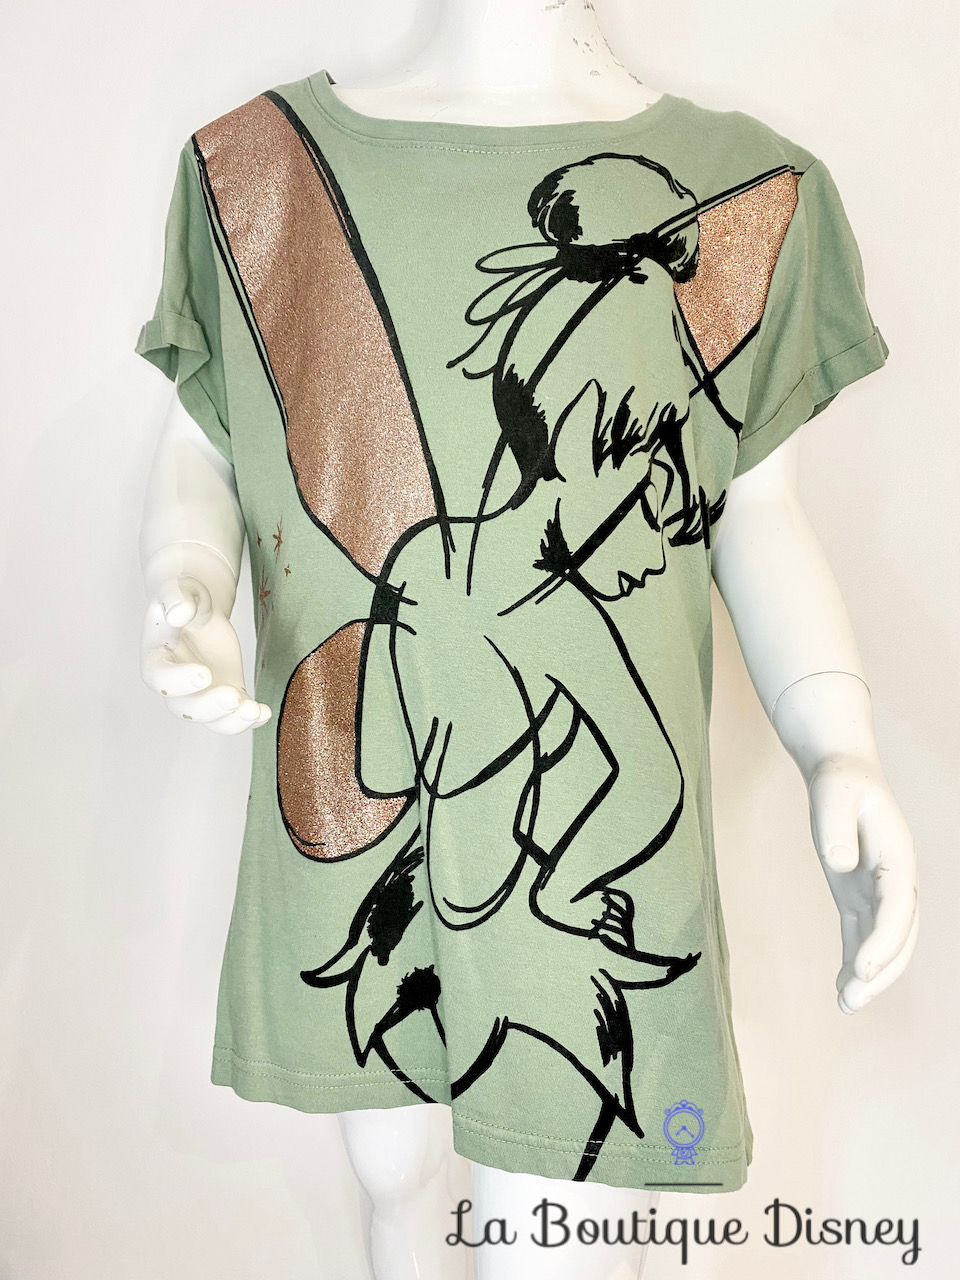 Tee shirt Fée Clochette Disney Primark Peter Pan taille XS 34-36 vert kaki paillettes